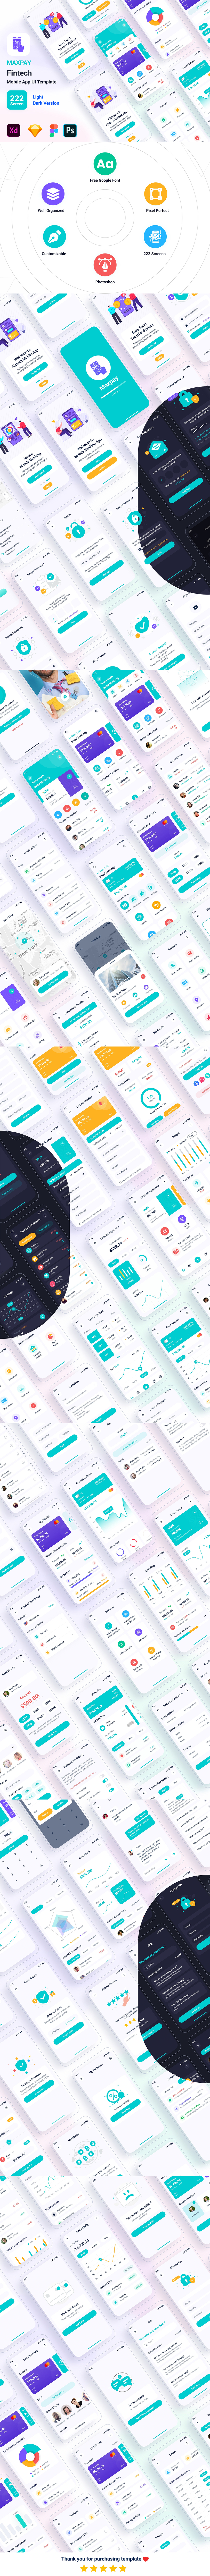 app Bank banking app Case Study currency fintech app ios Mobile app ui design UX design